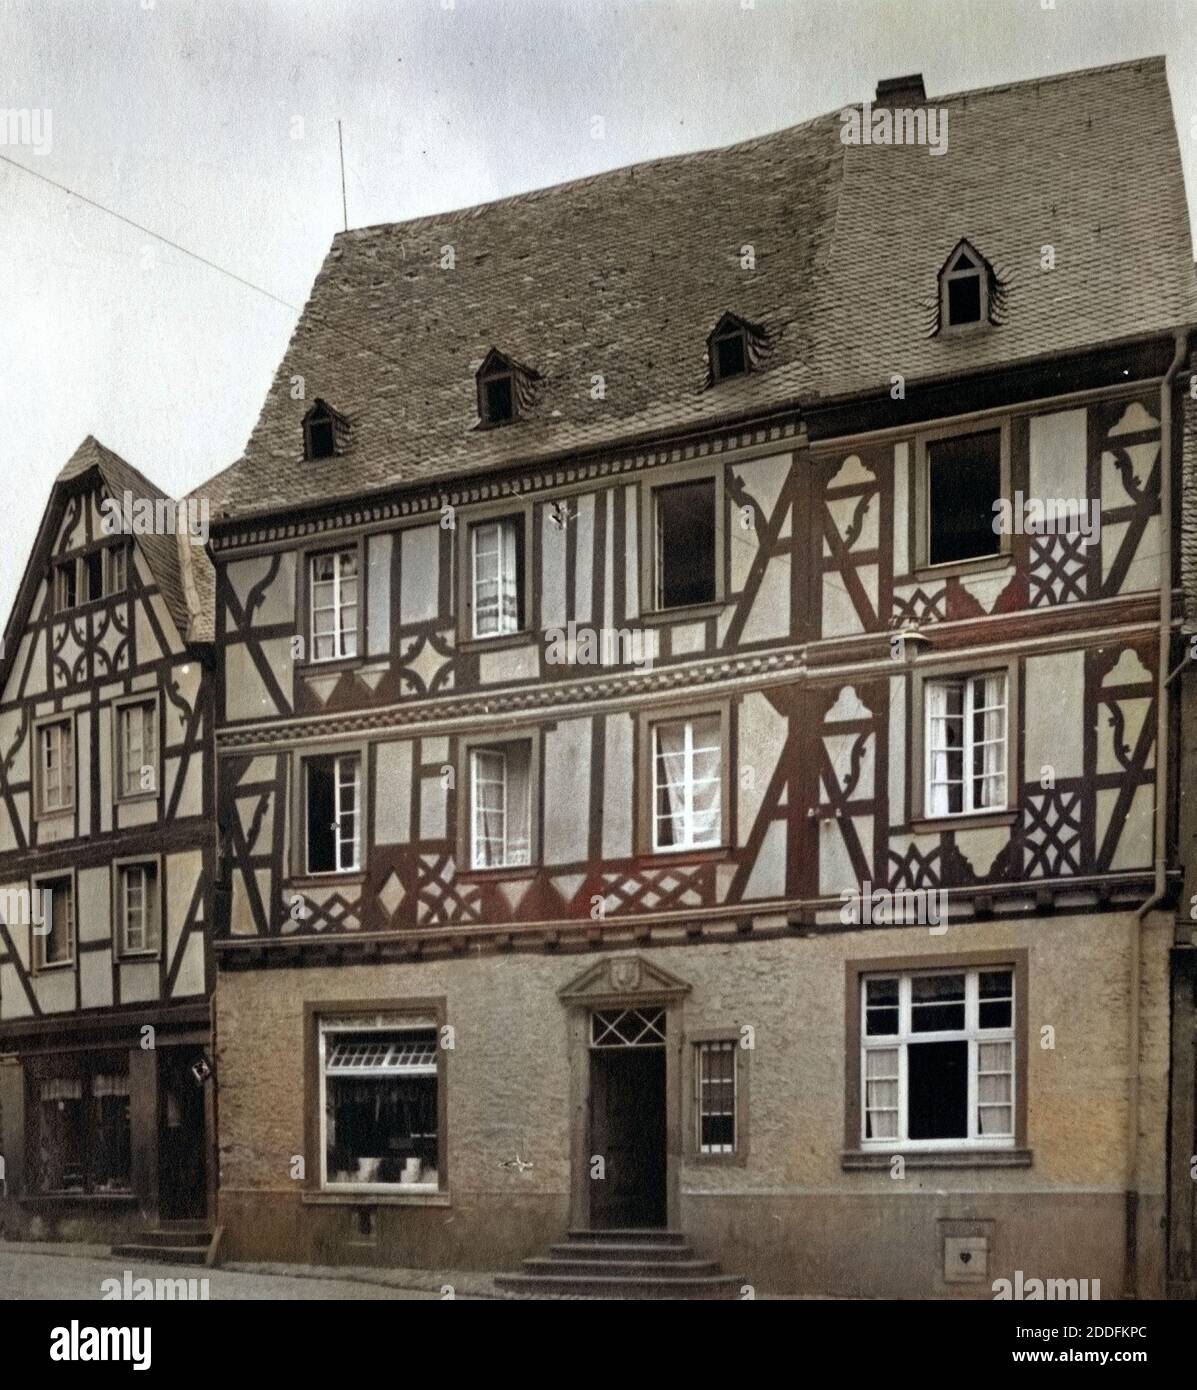 Fachwerkhaus in Münstermaifeld, Deutschland 1930er Jahre. Timbered house at Muenstermaifeld, Germany 1930s. Stock Photo